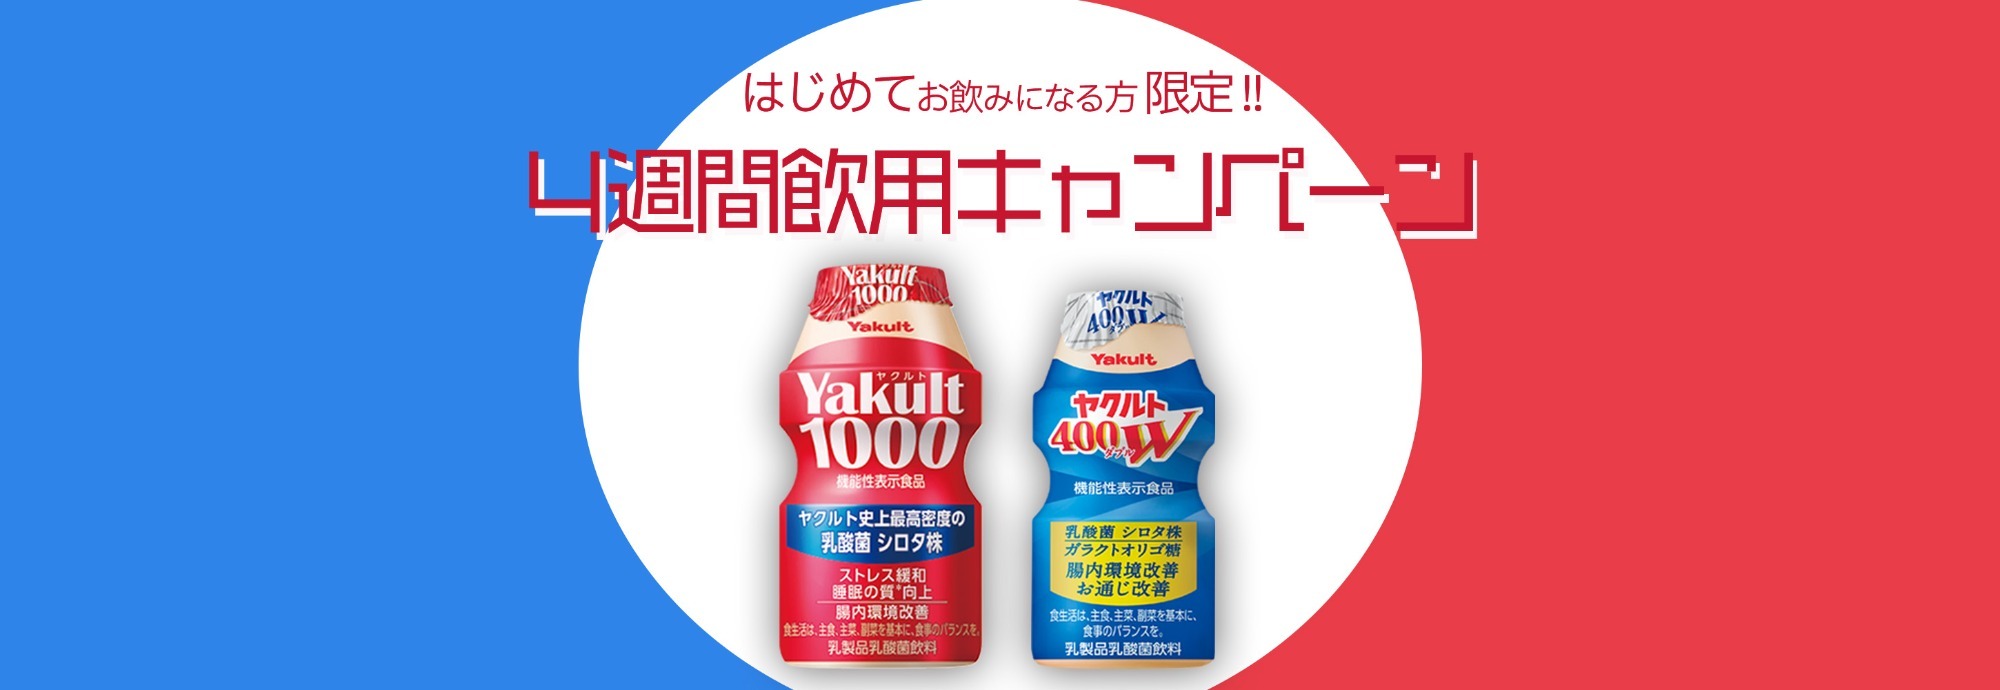 Yakult(ヤクルト)1000・400W 4週間飲用キャンペーン